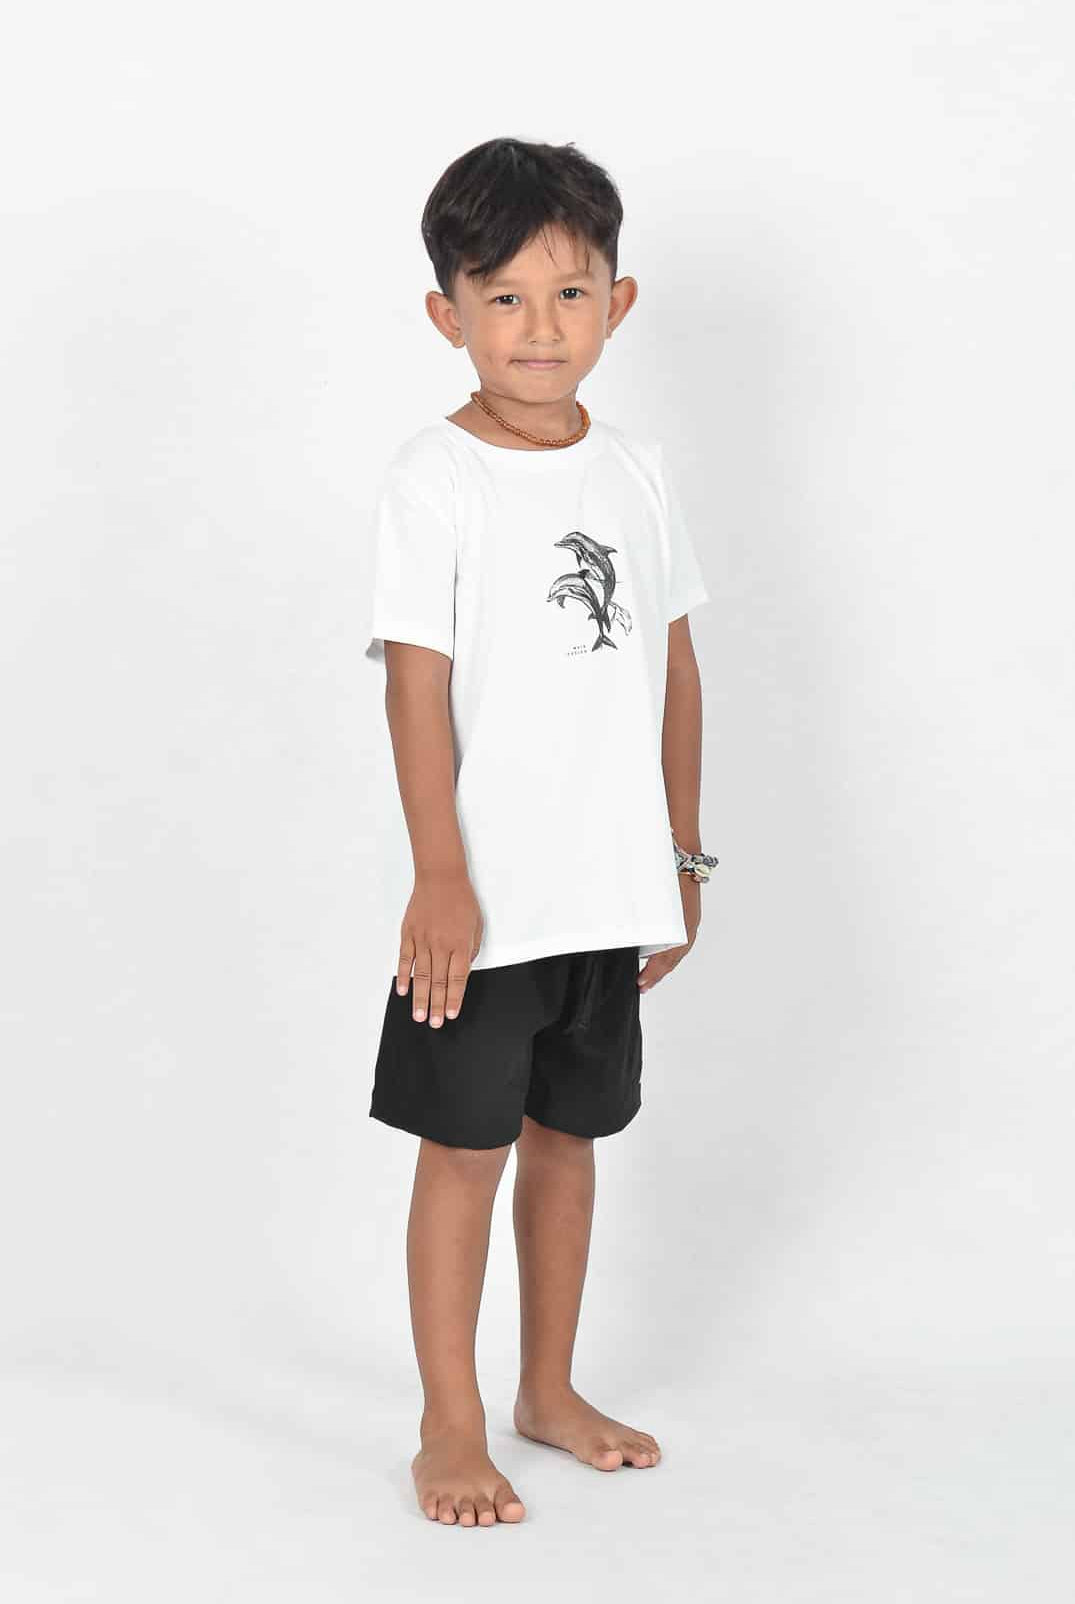 Aina Kids UV Shirt in white with artwork